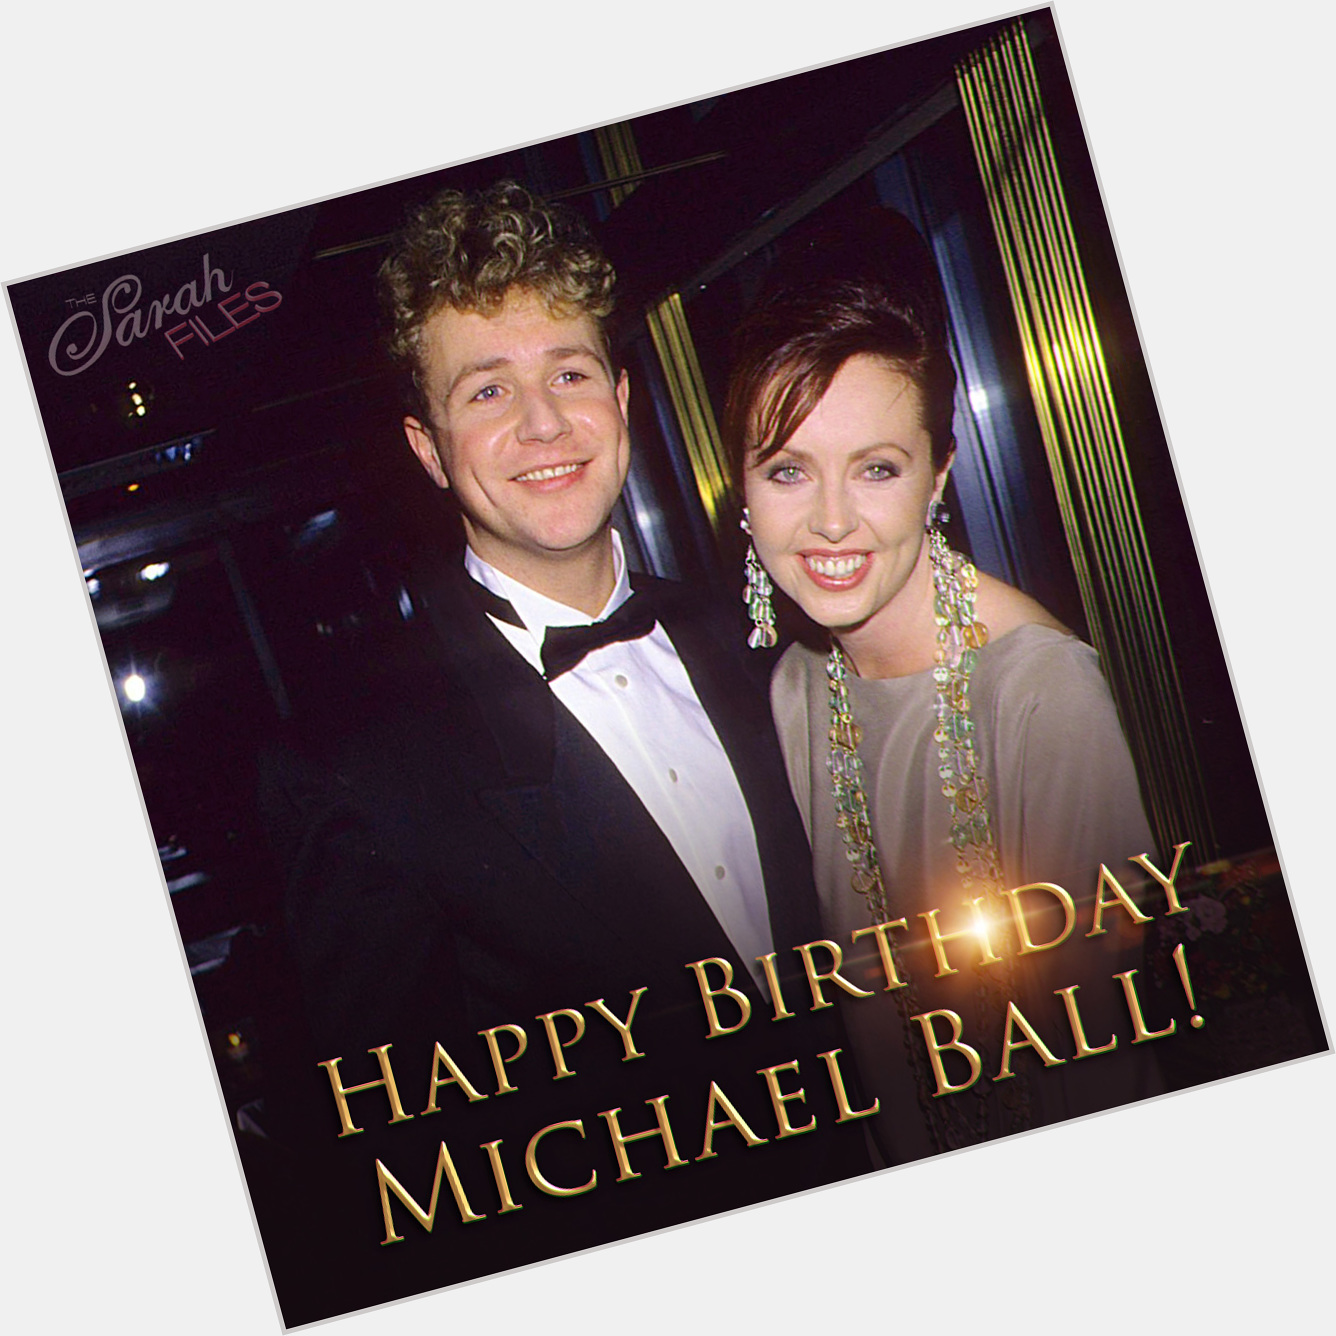 Happy birthday, Michael Ball!   